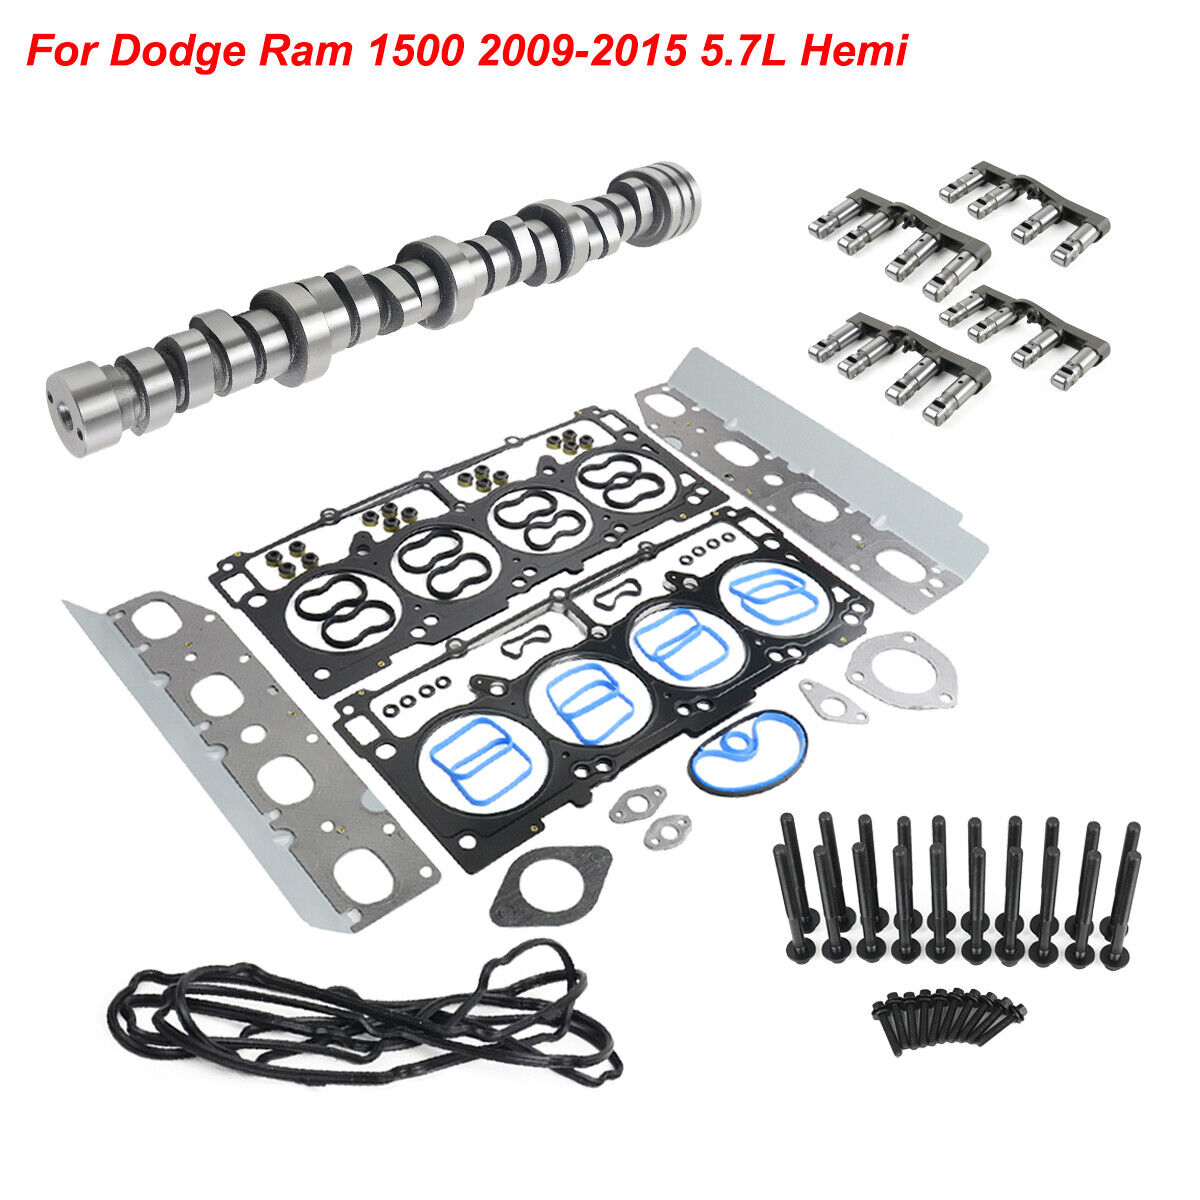 Hydraulic Lifters MDS Cam shaft Gaskets Kit For 5.7L Hemi Dodge Ram 1500 09-2015